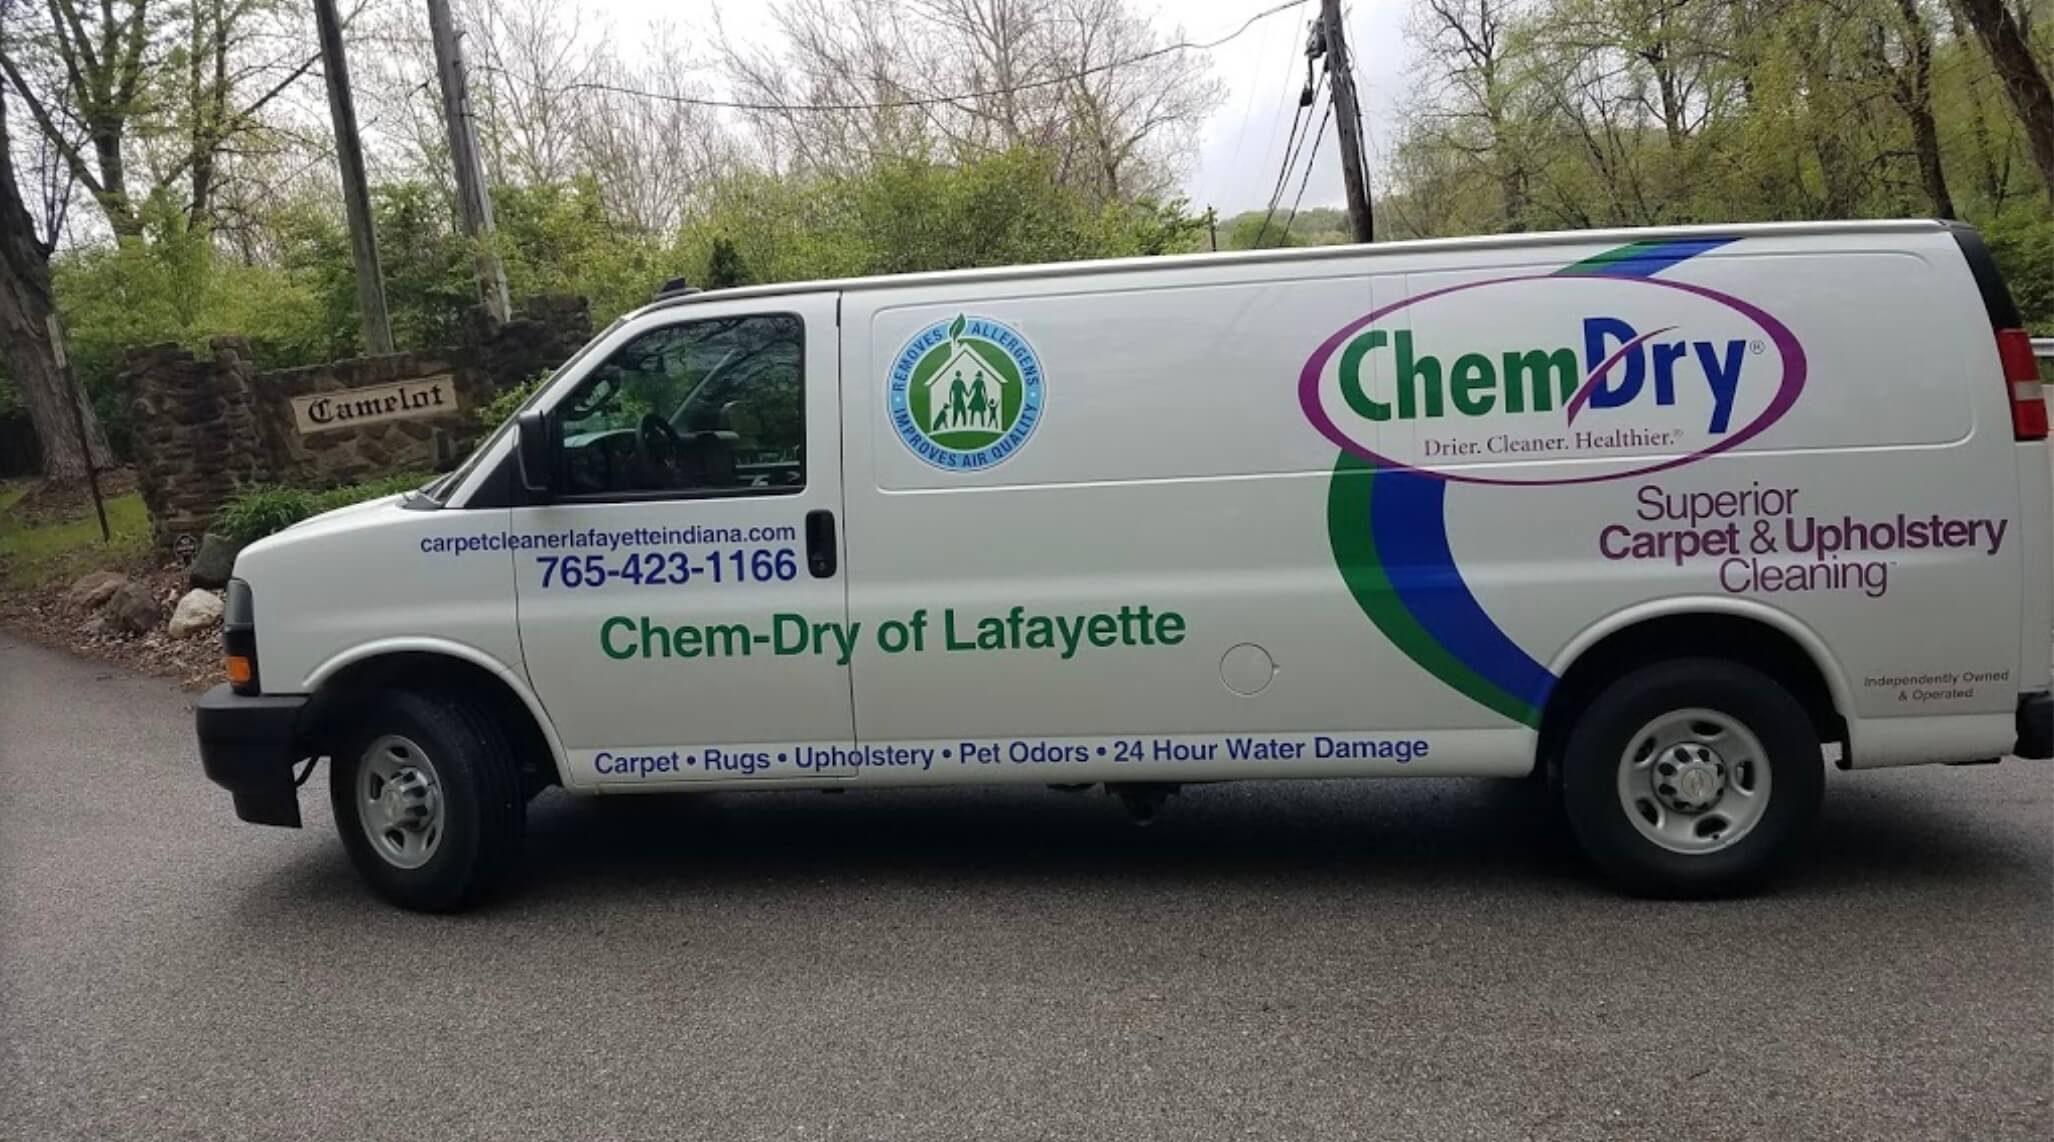 Chem-Dry of Lafayette carpet cleaning van